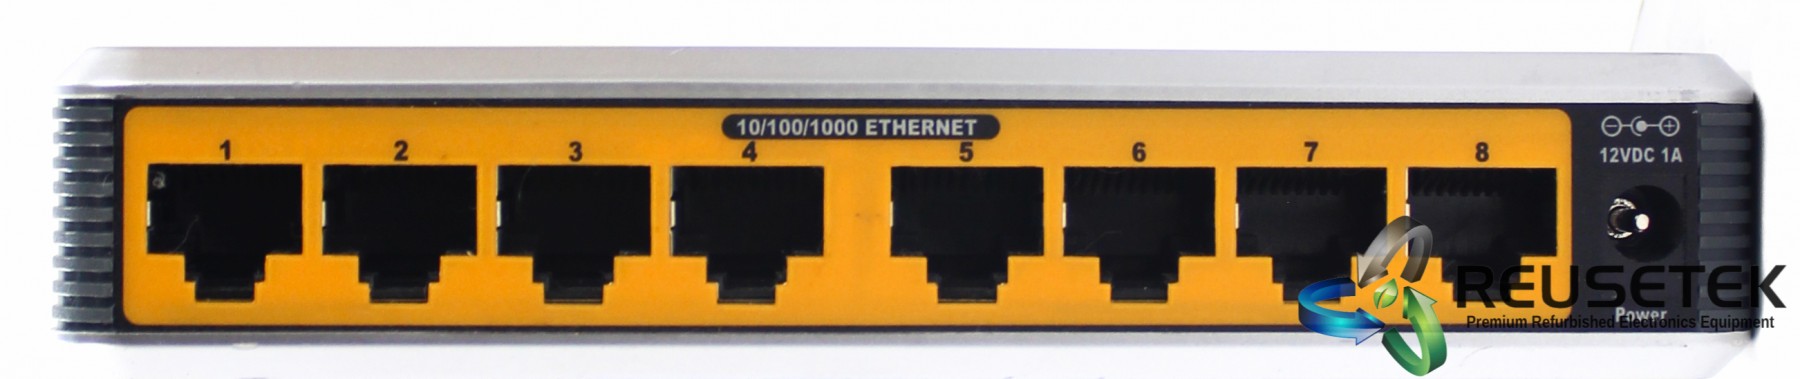 500030877-Cisco Linksys EG008W ver. 3 Gigabit 8-Port Workgroup Switch-image